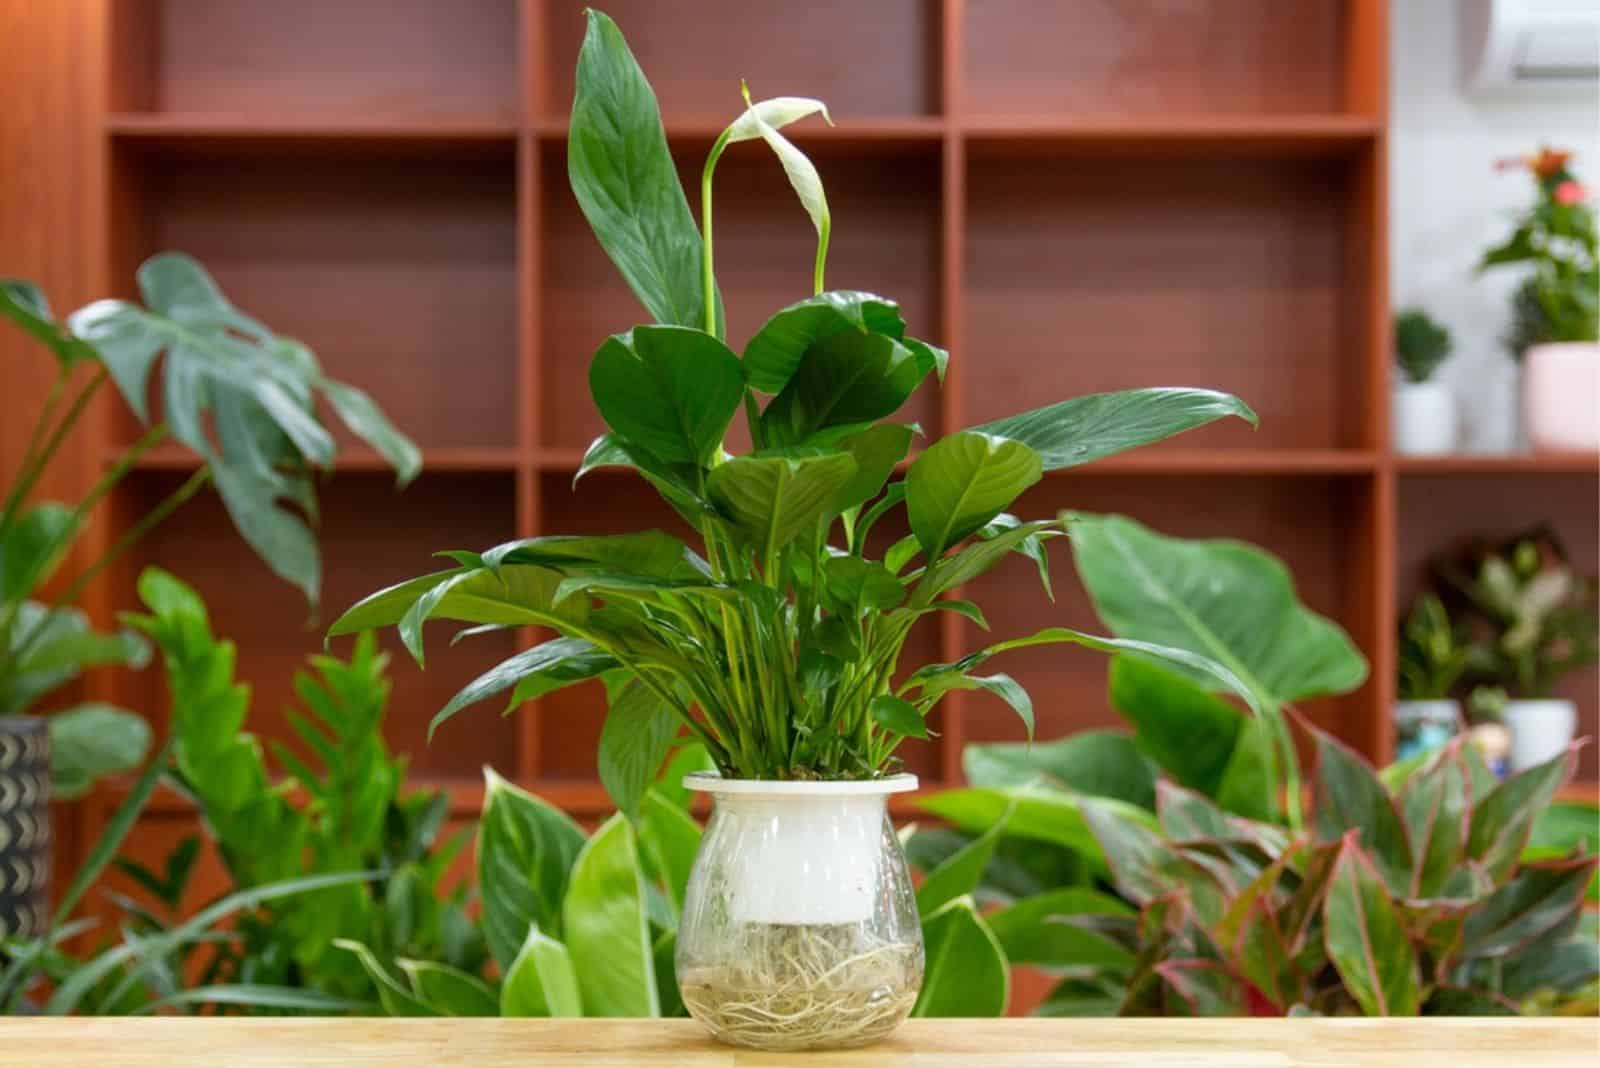 Spathiphyllum (Peace Lily) aquatic plants